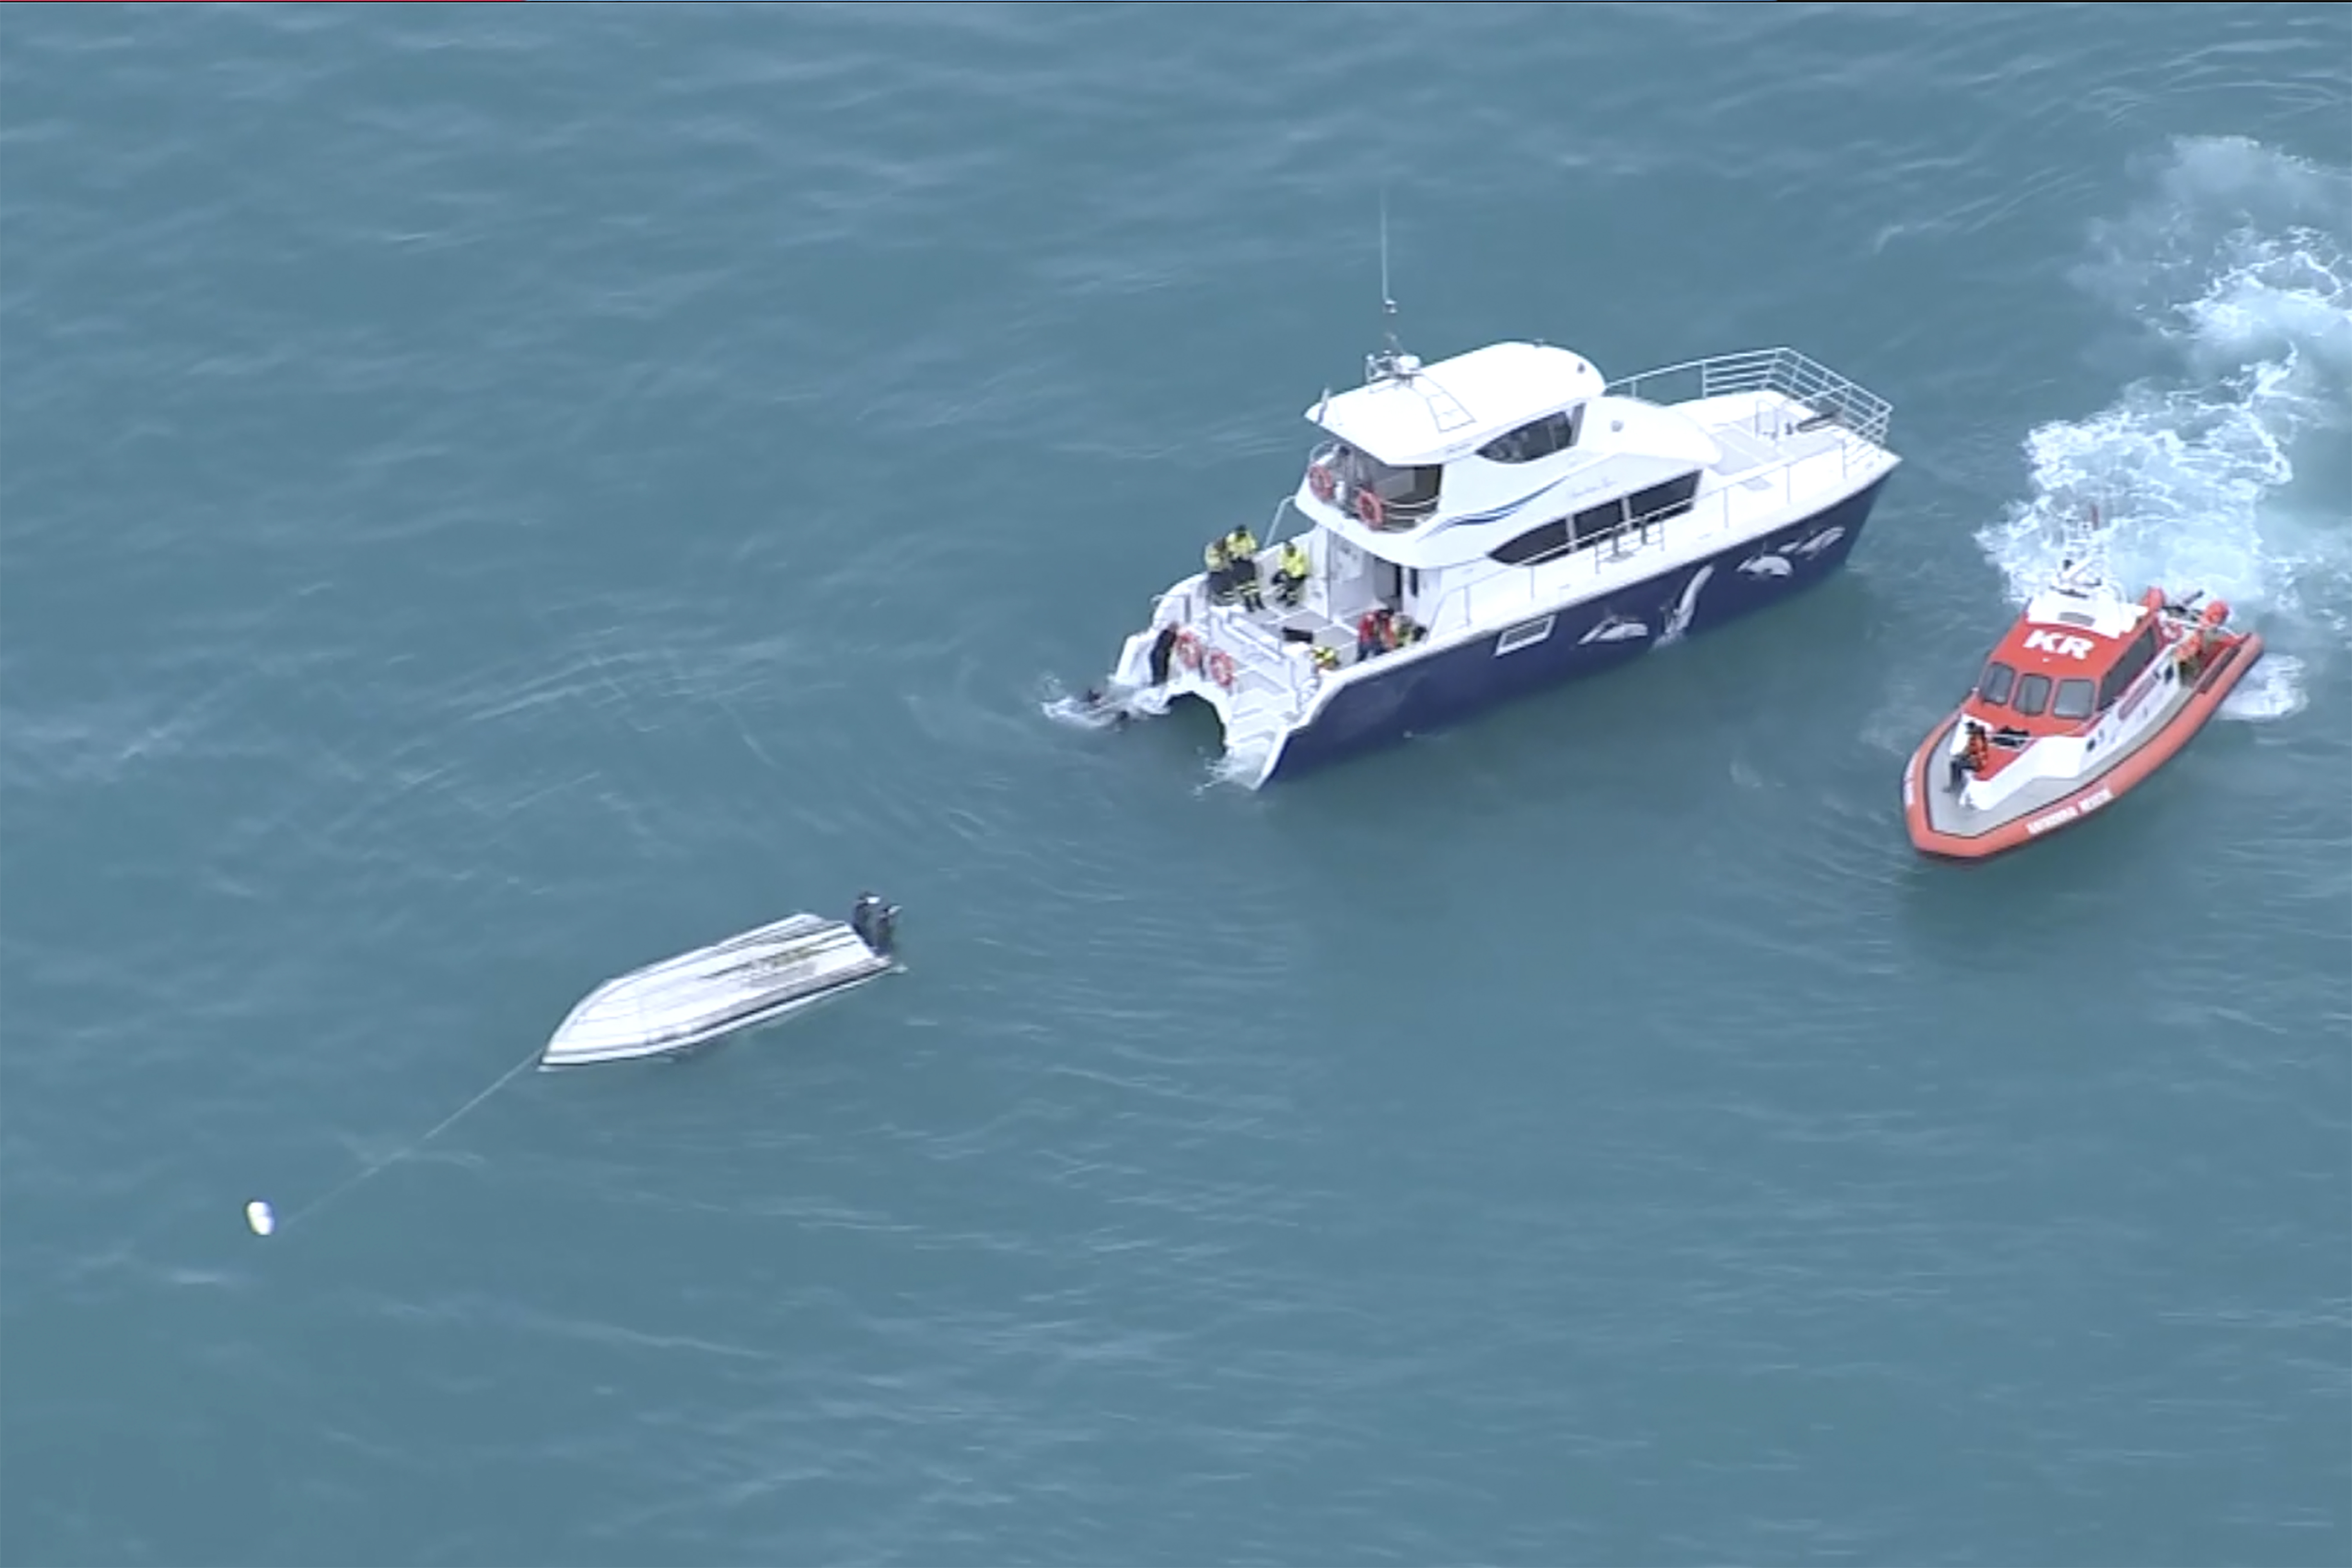 Two rescue boats alongside a capsized boat in Kaikoura, New Zealand